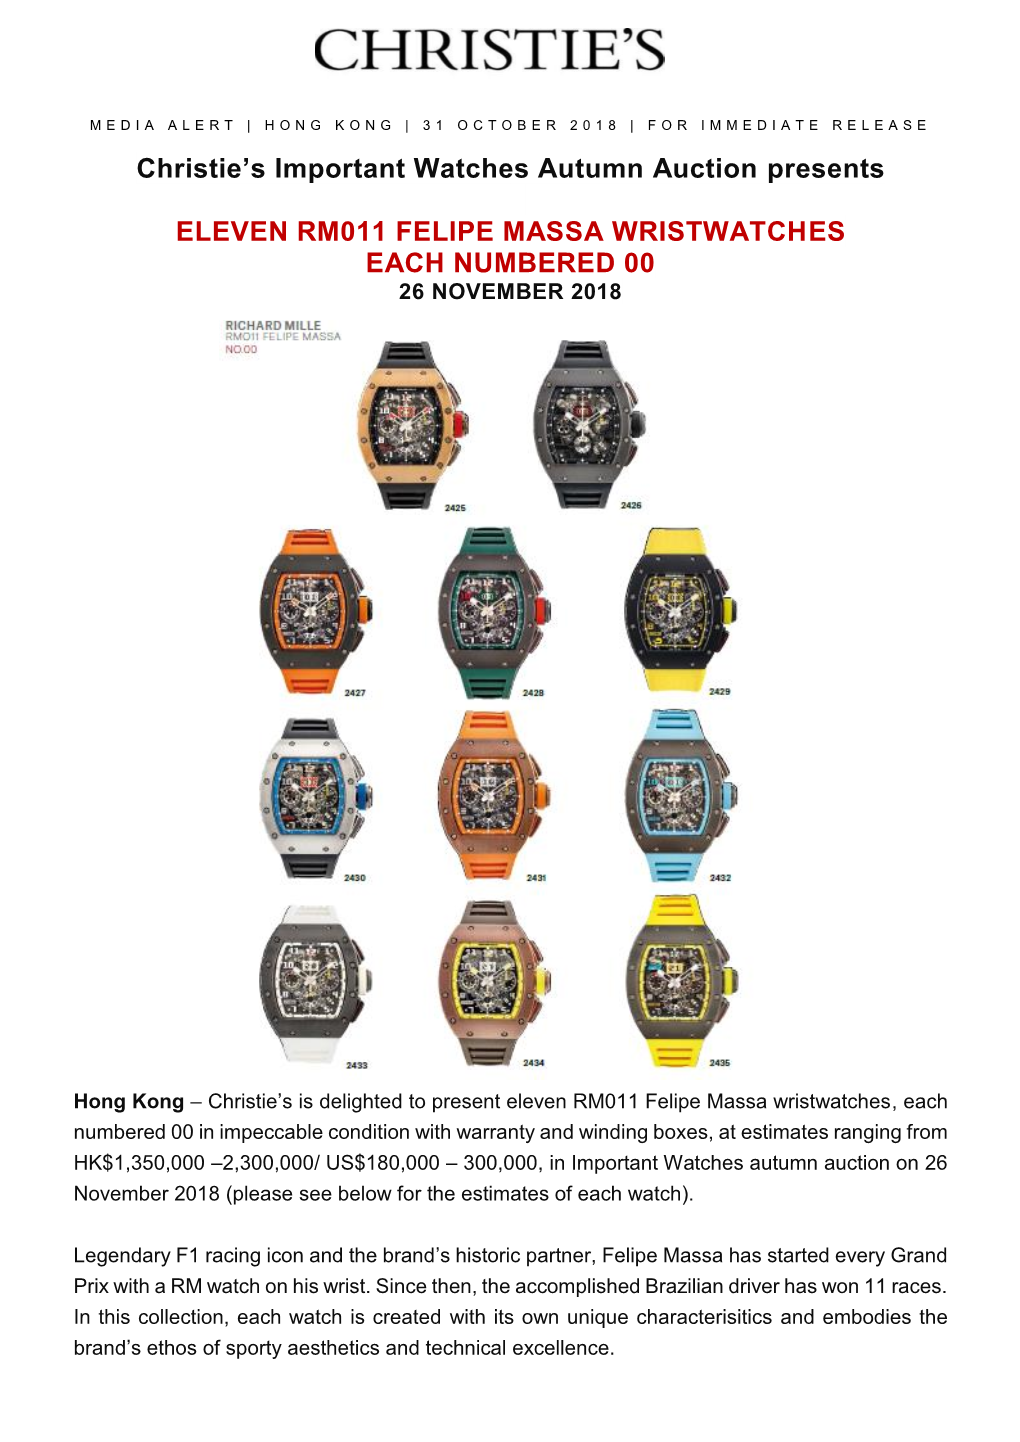 Christie's Important Watches Autumn Auction Presents ELEVEN RM011